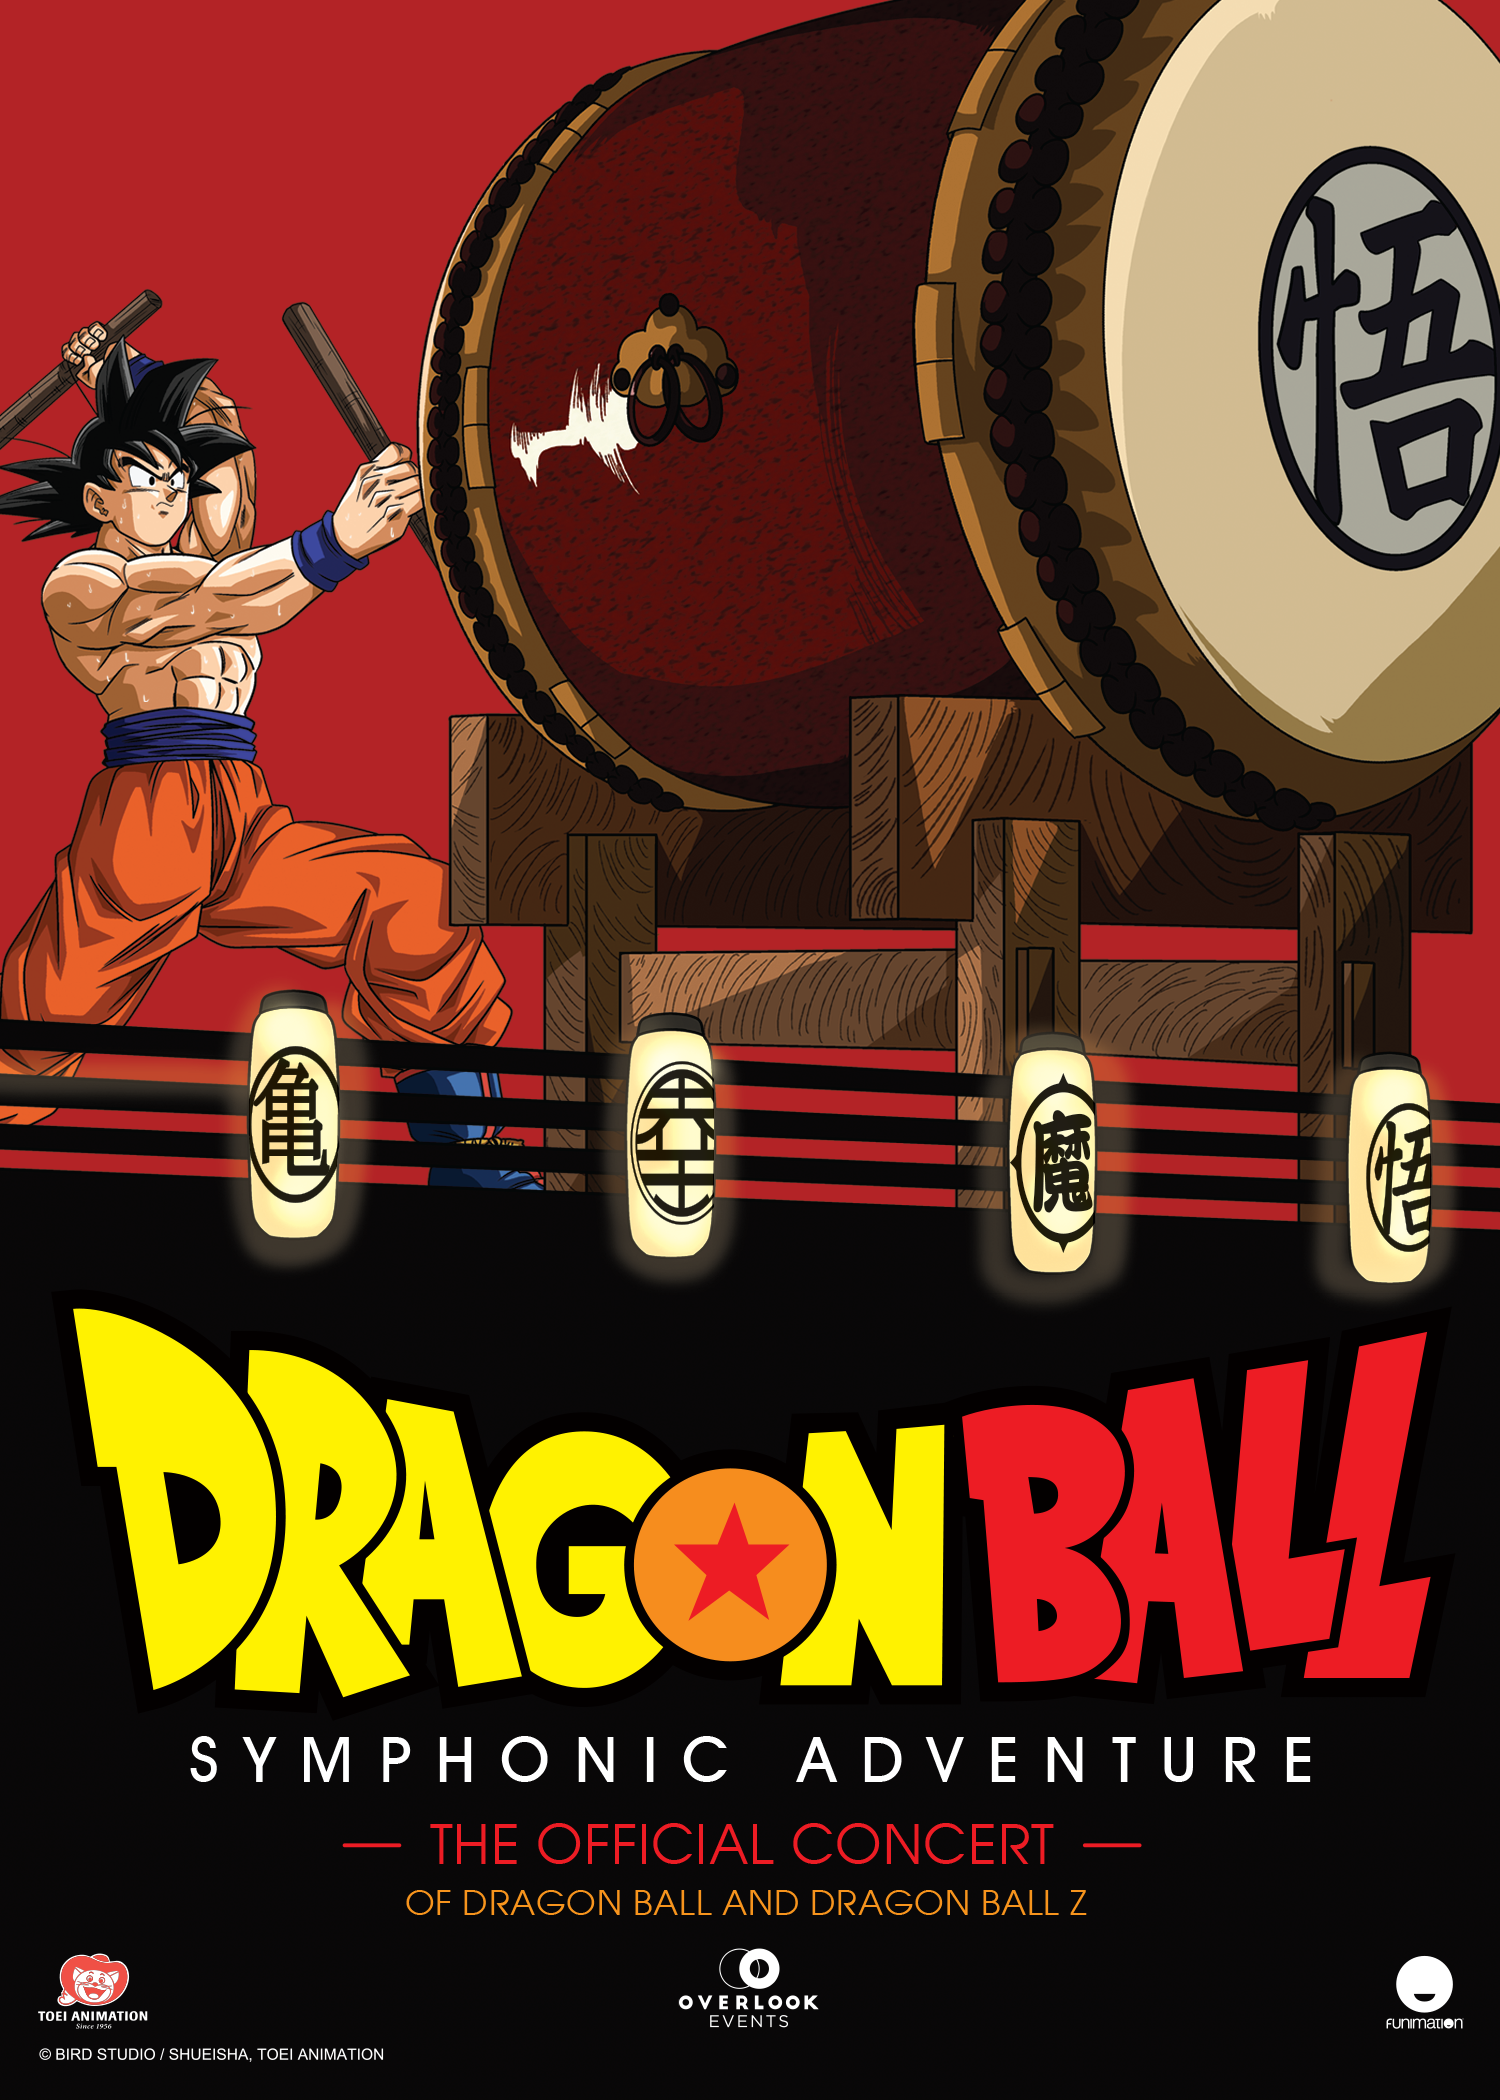 The Dragon Ball Symphonic Adventure - Promo Art